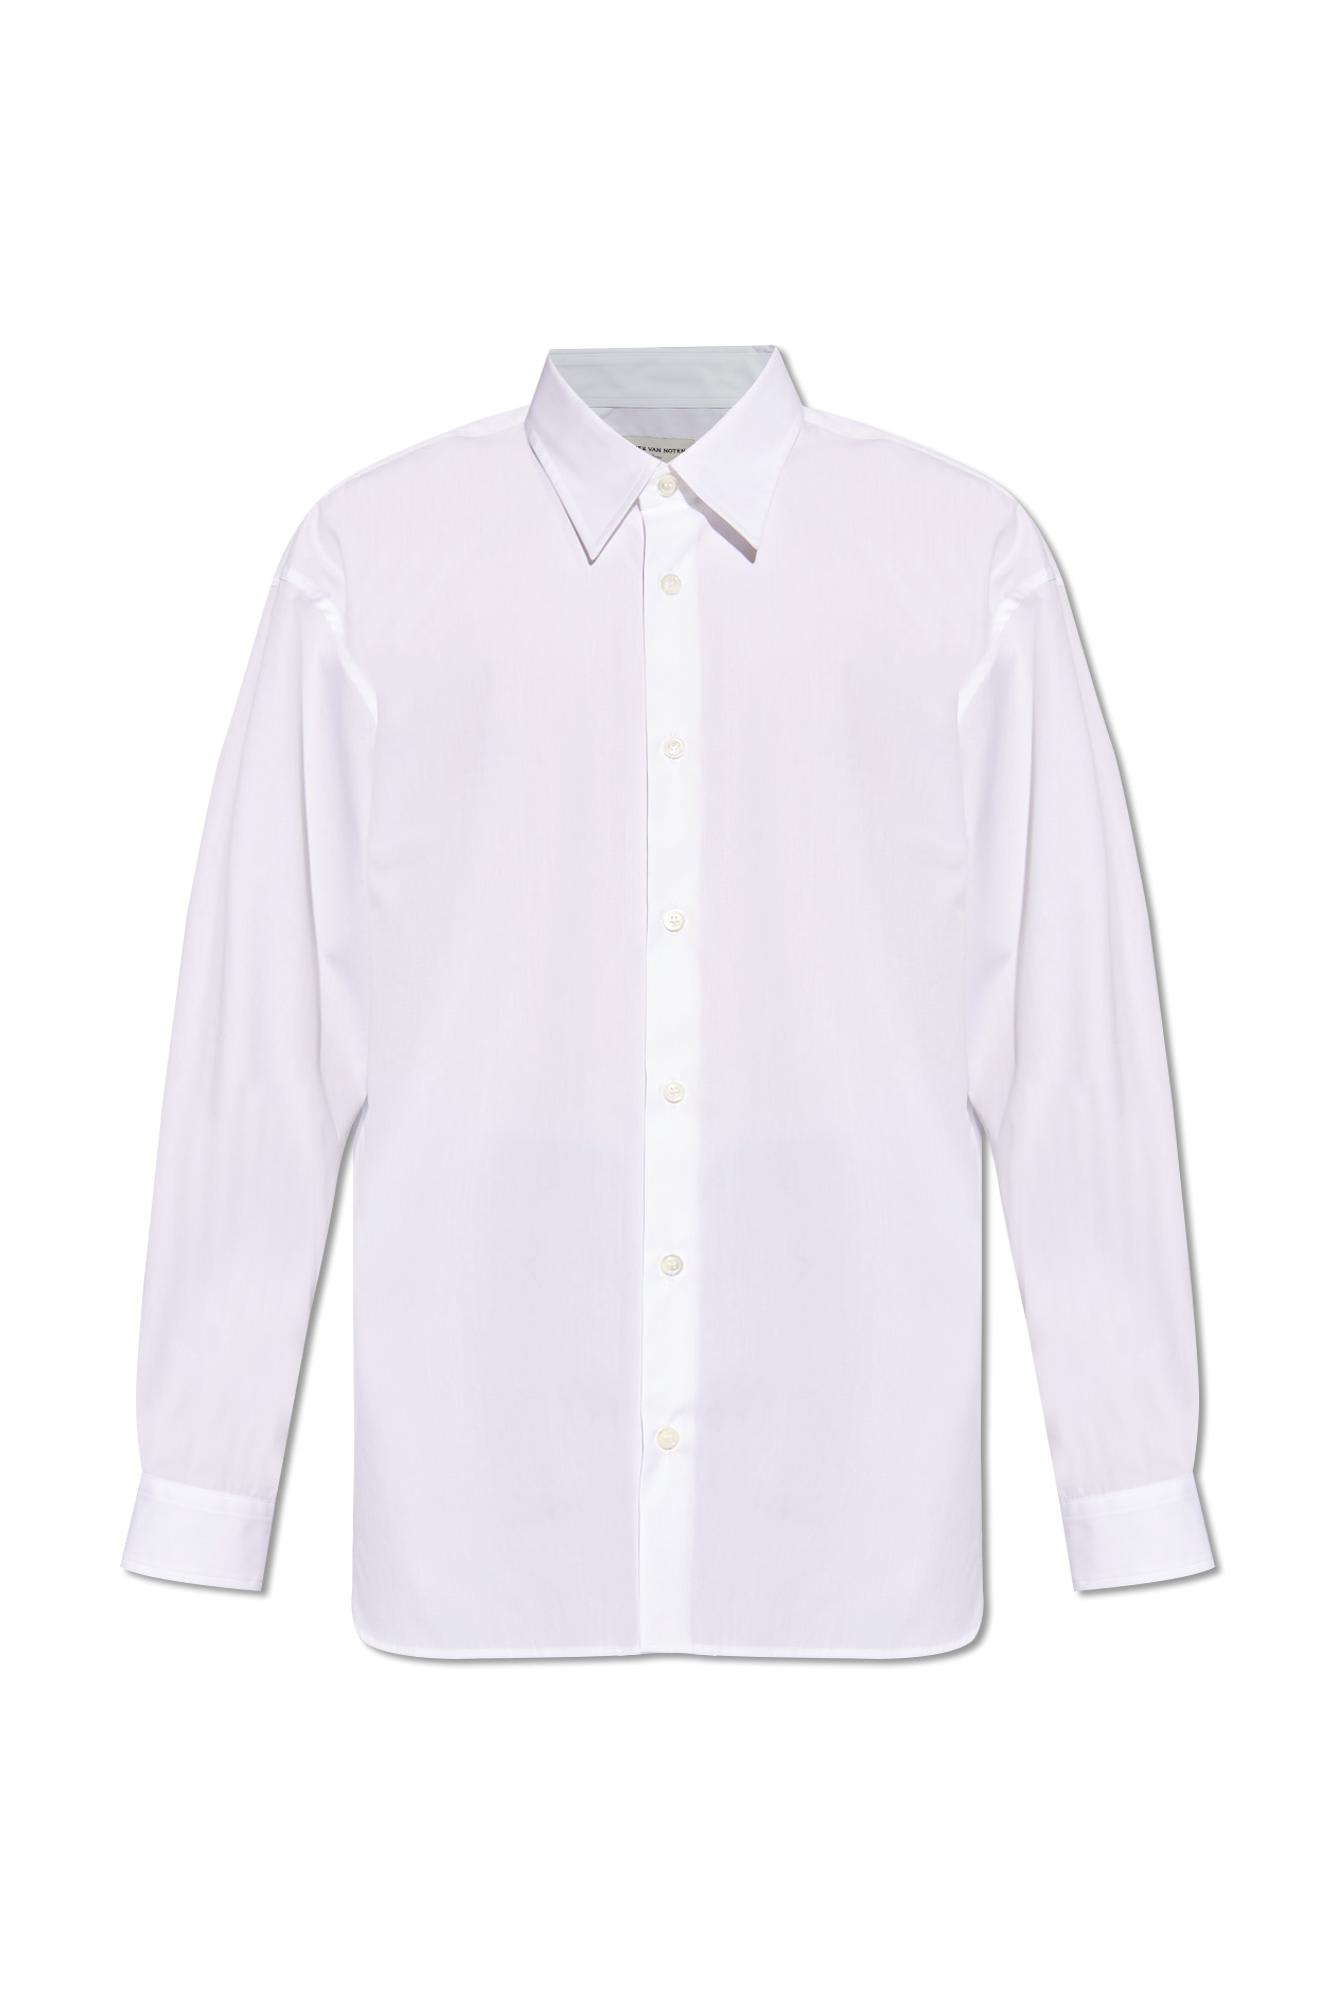 Dries Van Noten Shirt With Pinstripes In White